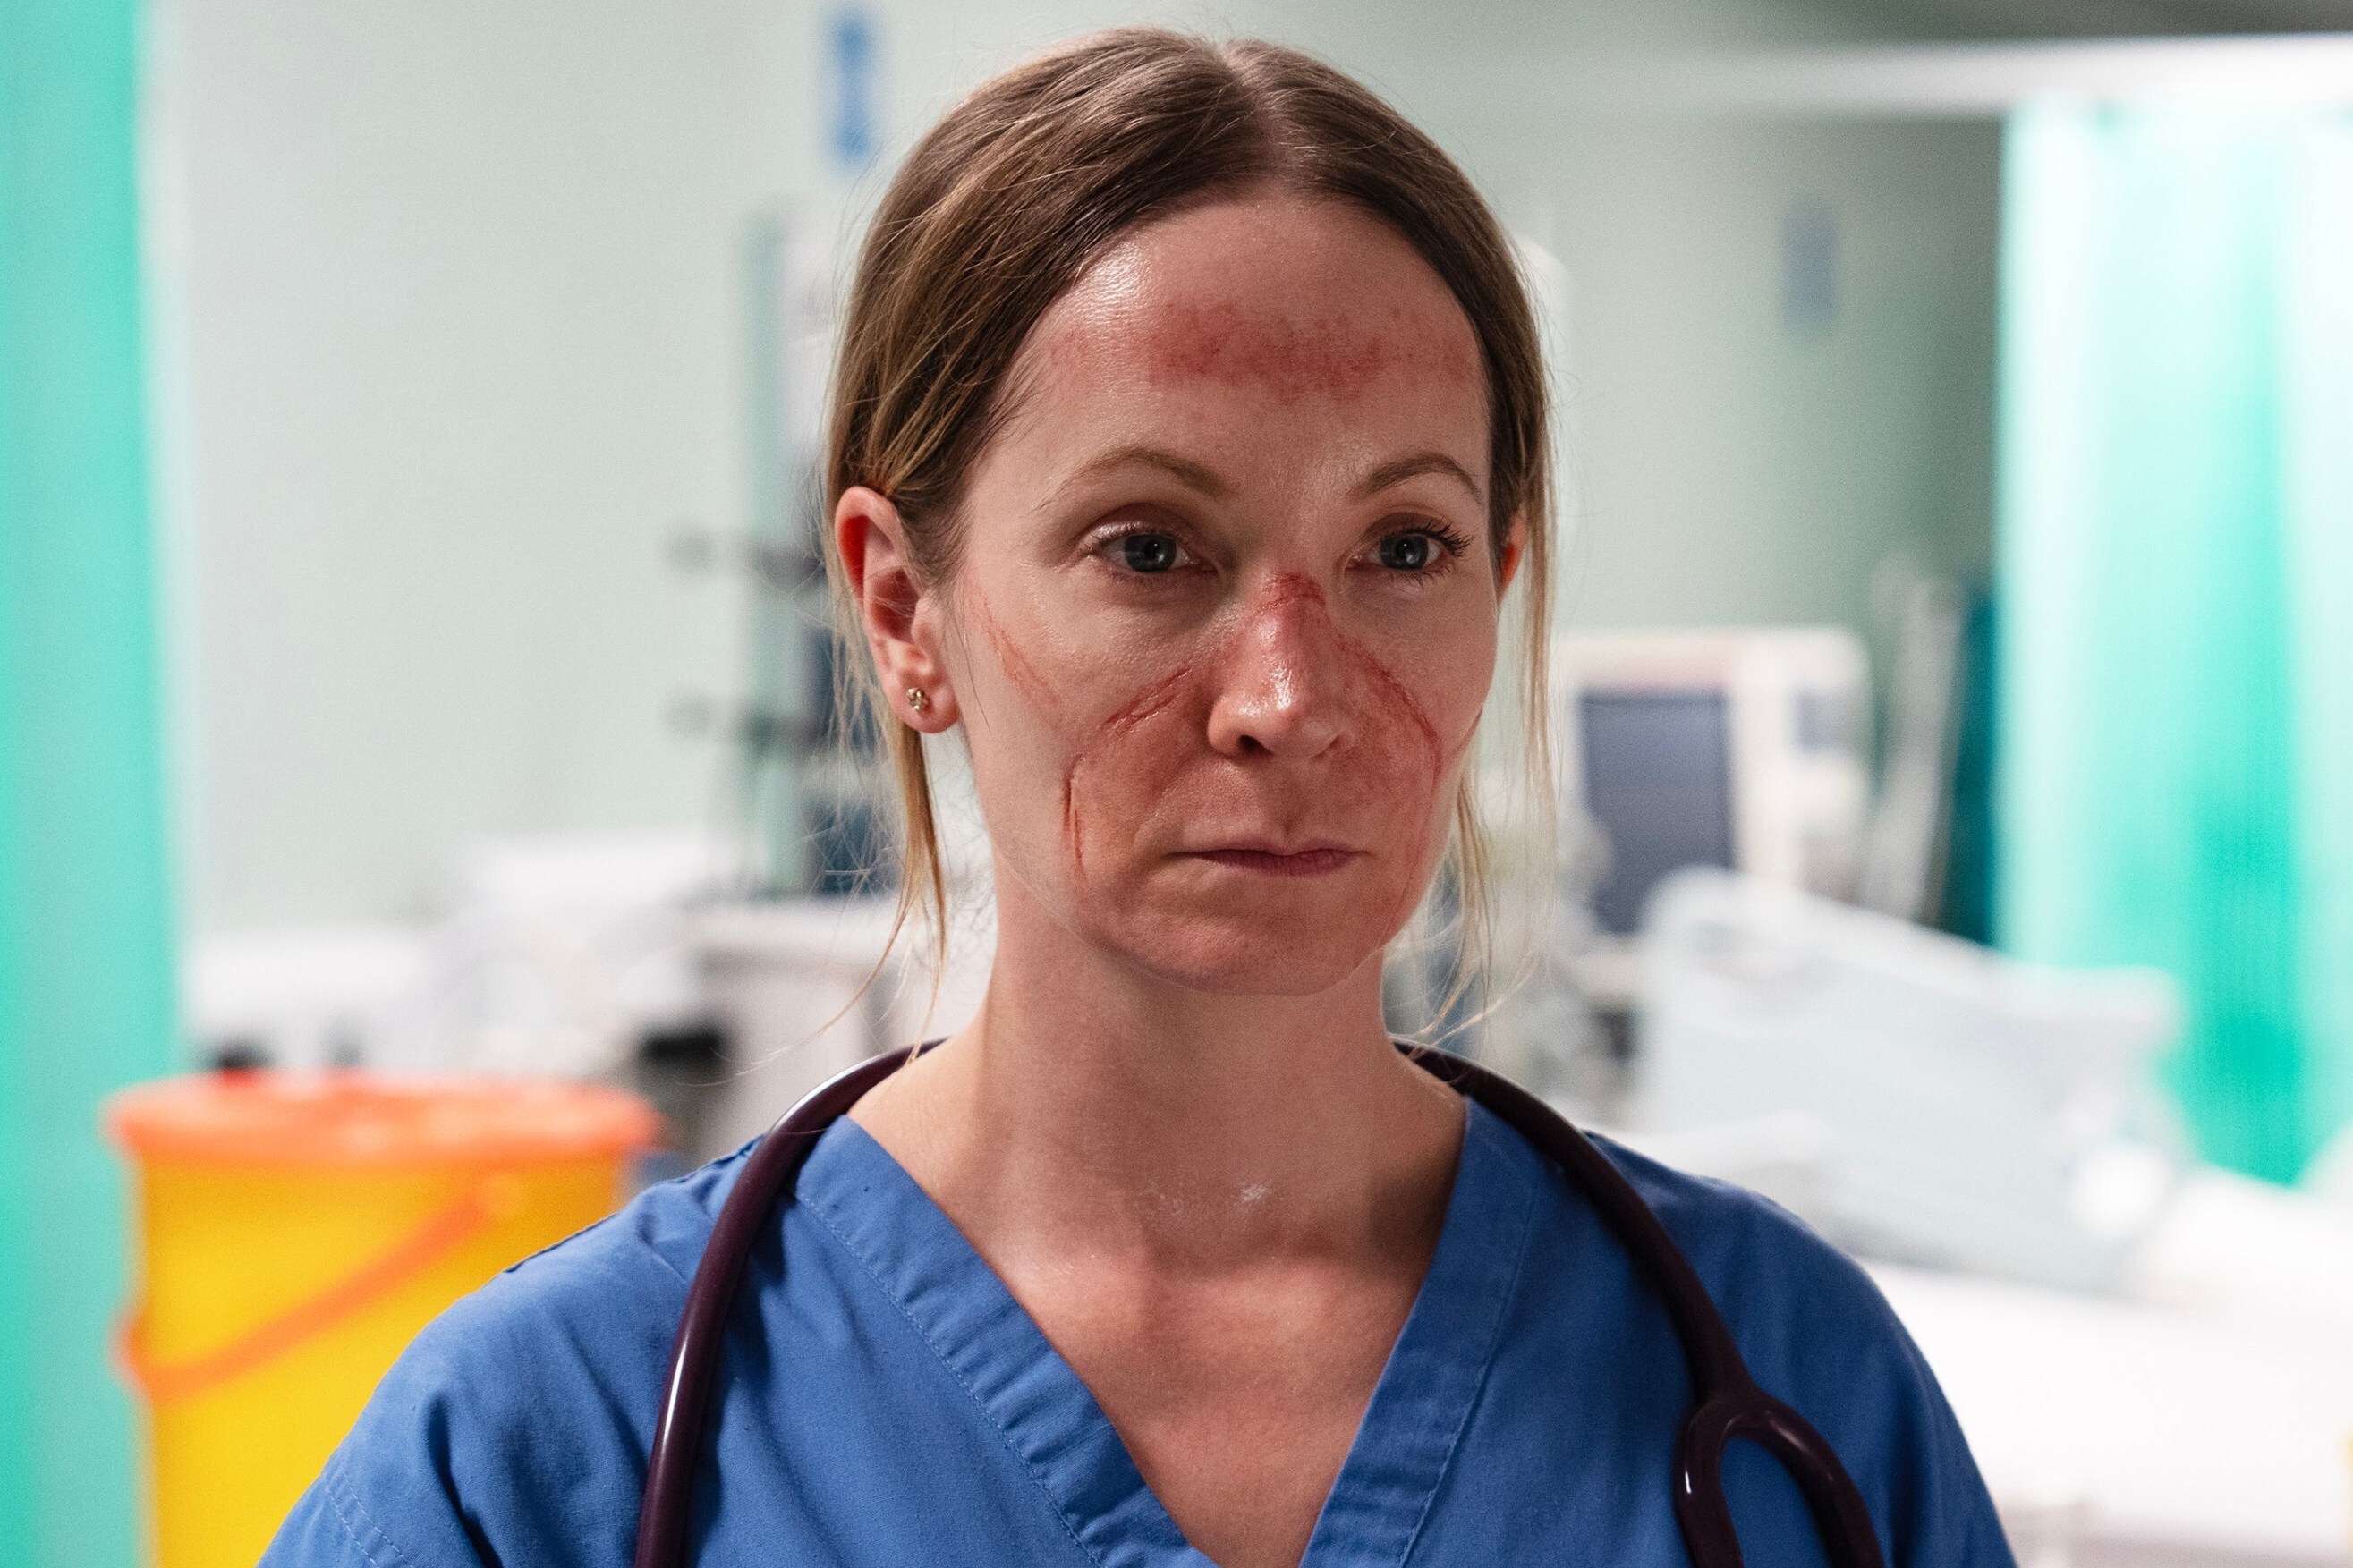 La actriz Joanne Froggatt encarna a una doctora en la serie de la ITV.